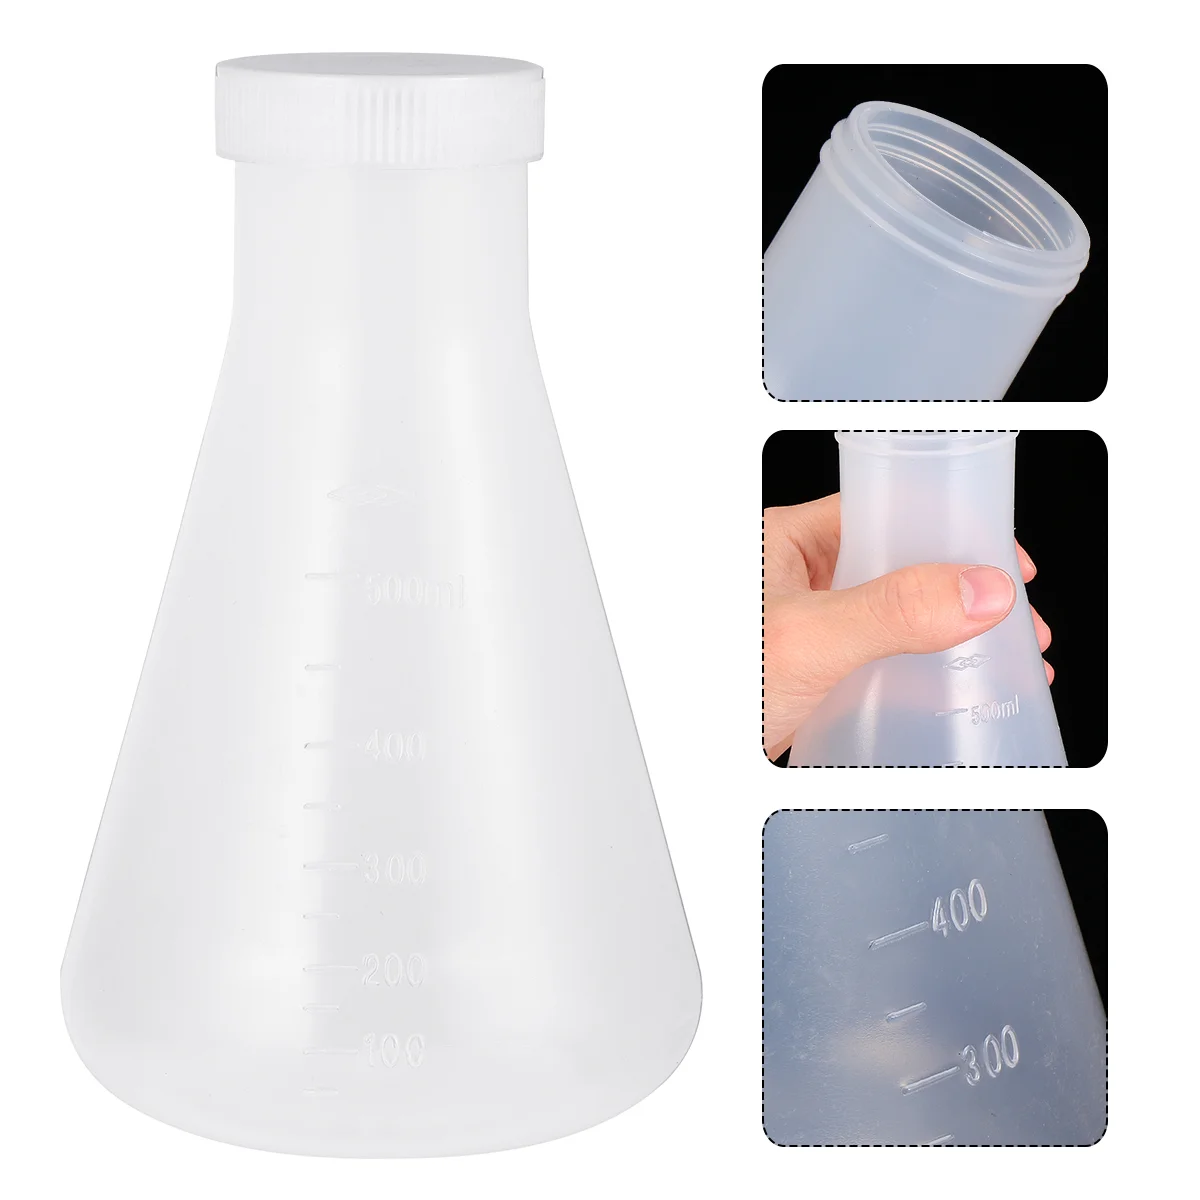 

Flask Conical Plasticerlenmeyer Science Flasks Laboratory Chemistrybeaker Experiment Polypropylene Set Beakers Measuring Mouth